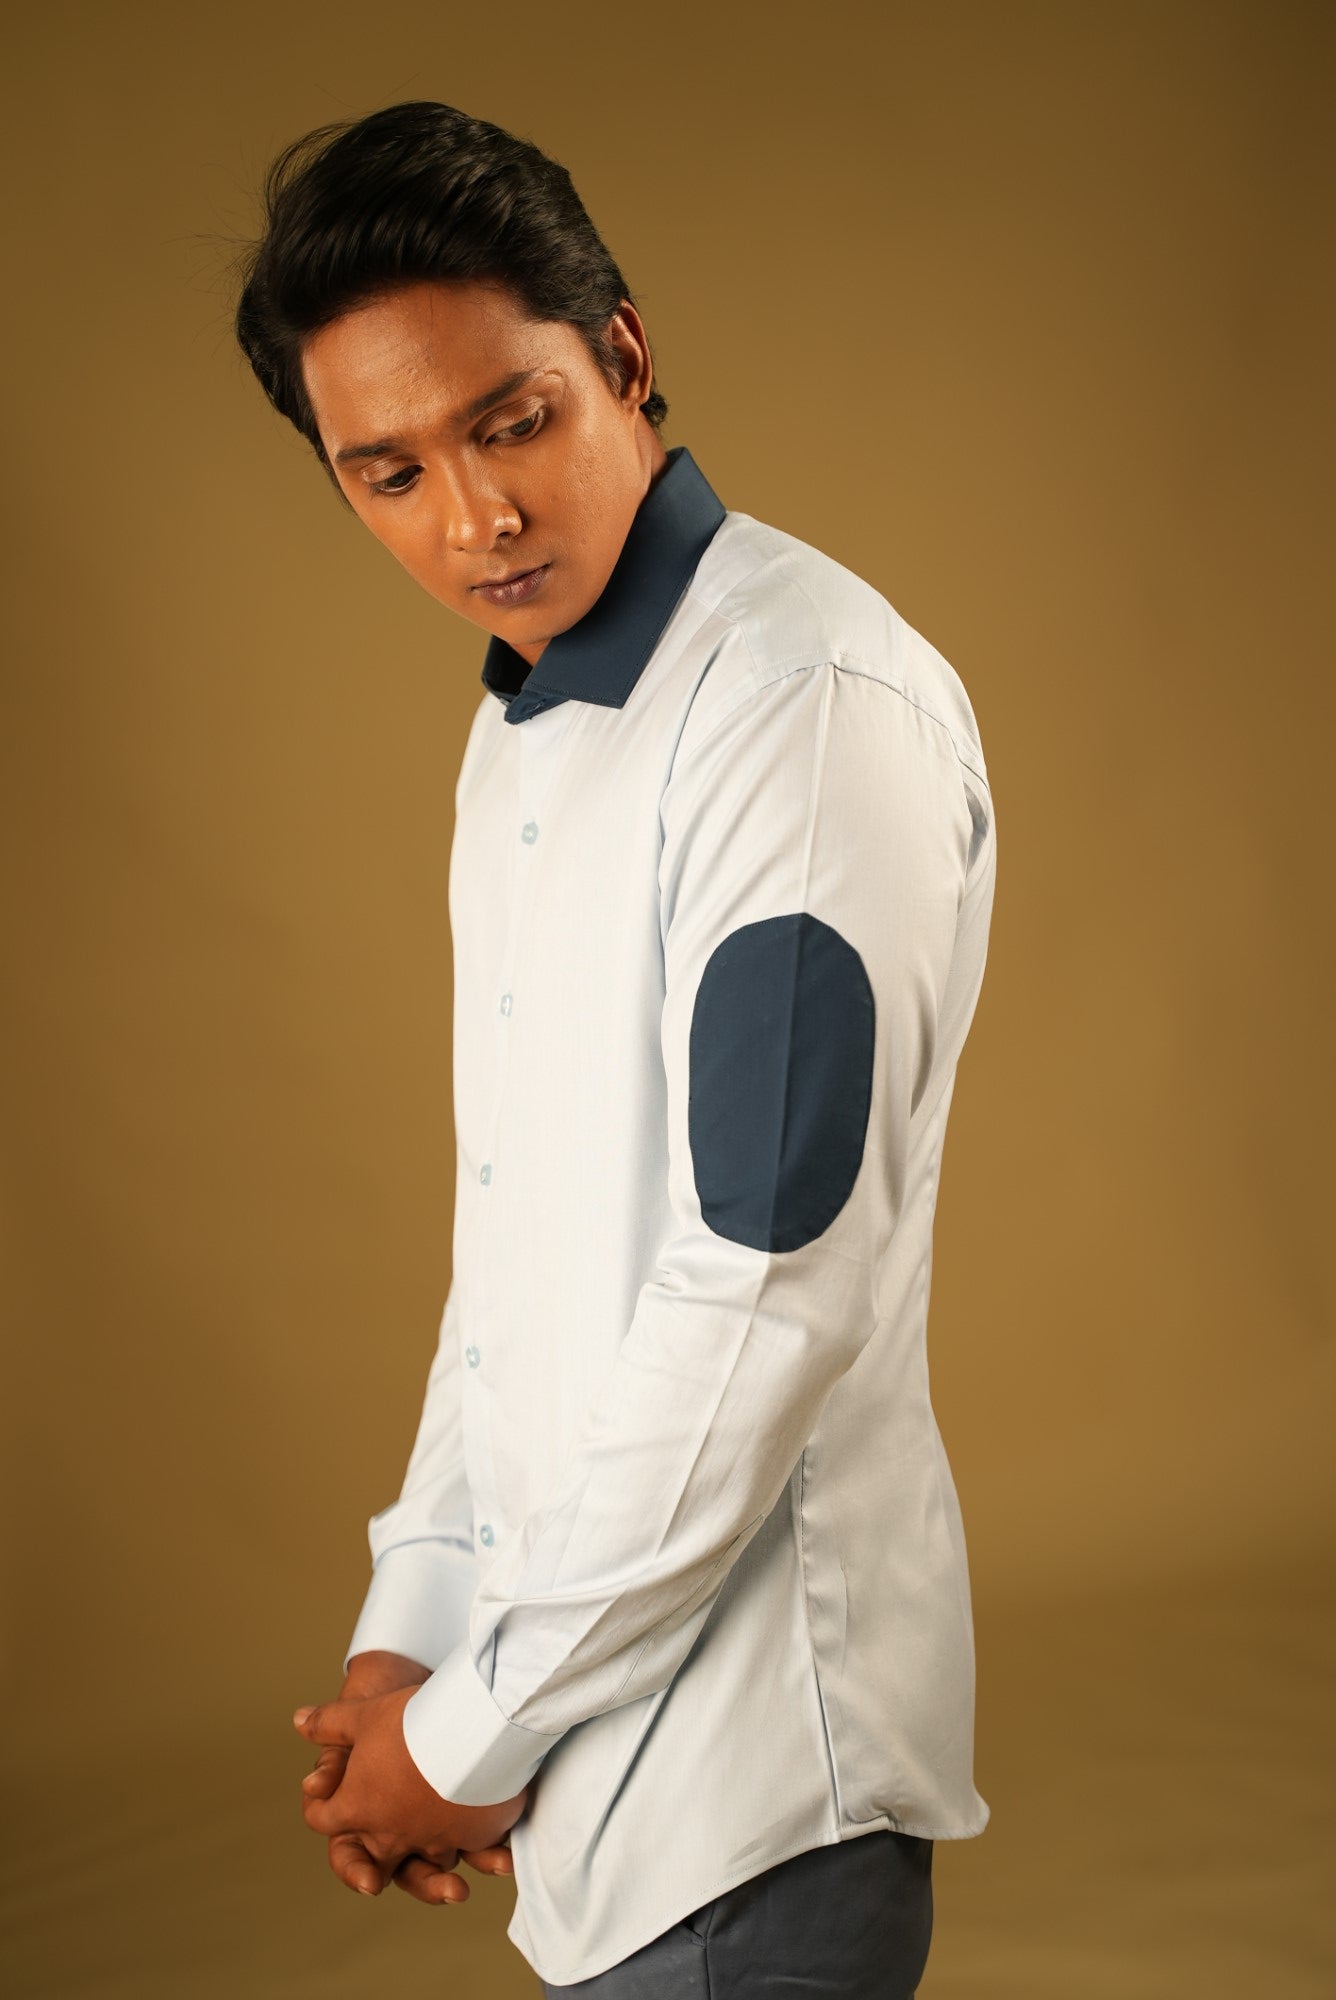 Men's Light Blue Color Dark Kola Shirt Full Sleeves Casual Shirt - Hilo Design